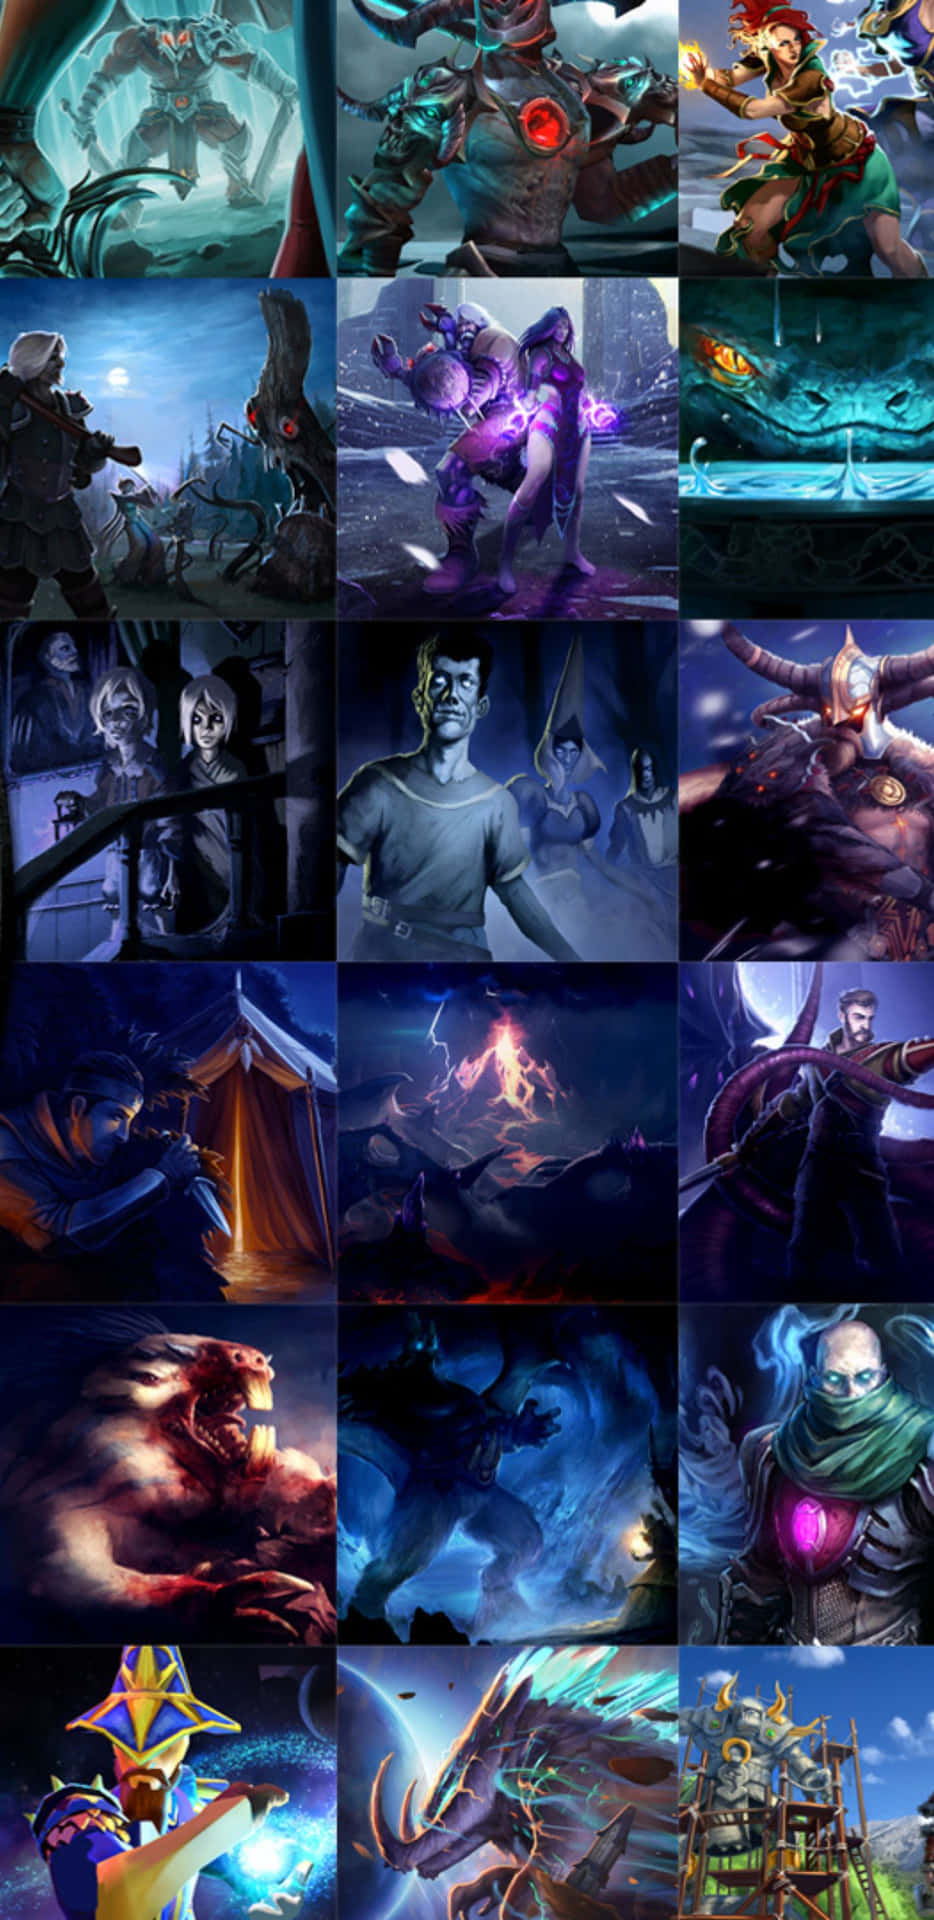 Leagueof Legends Hintergrundbilder